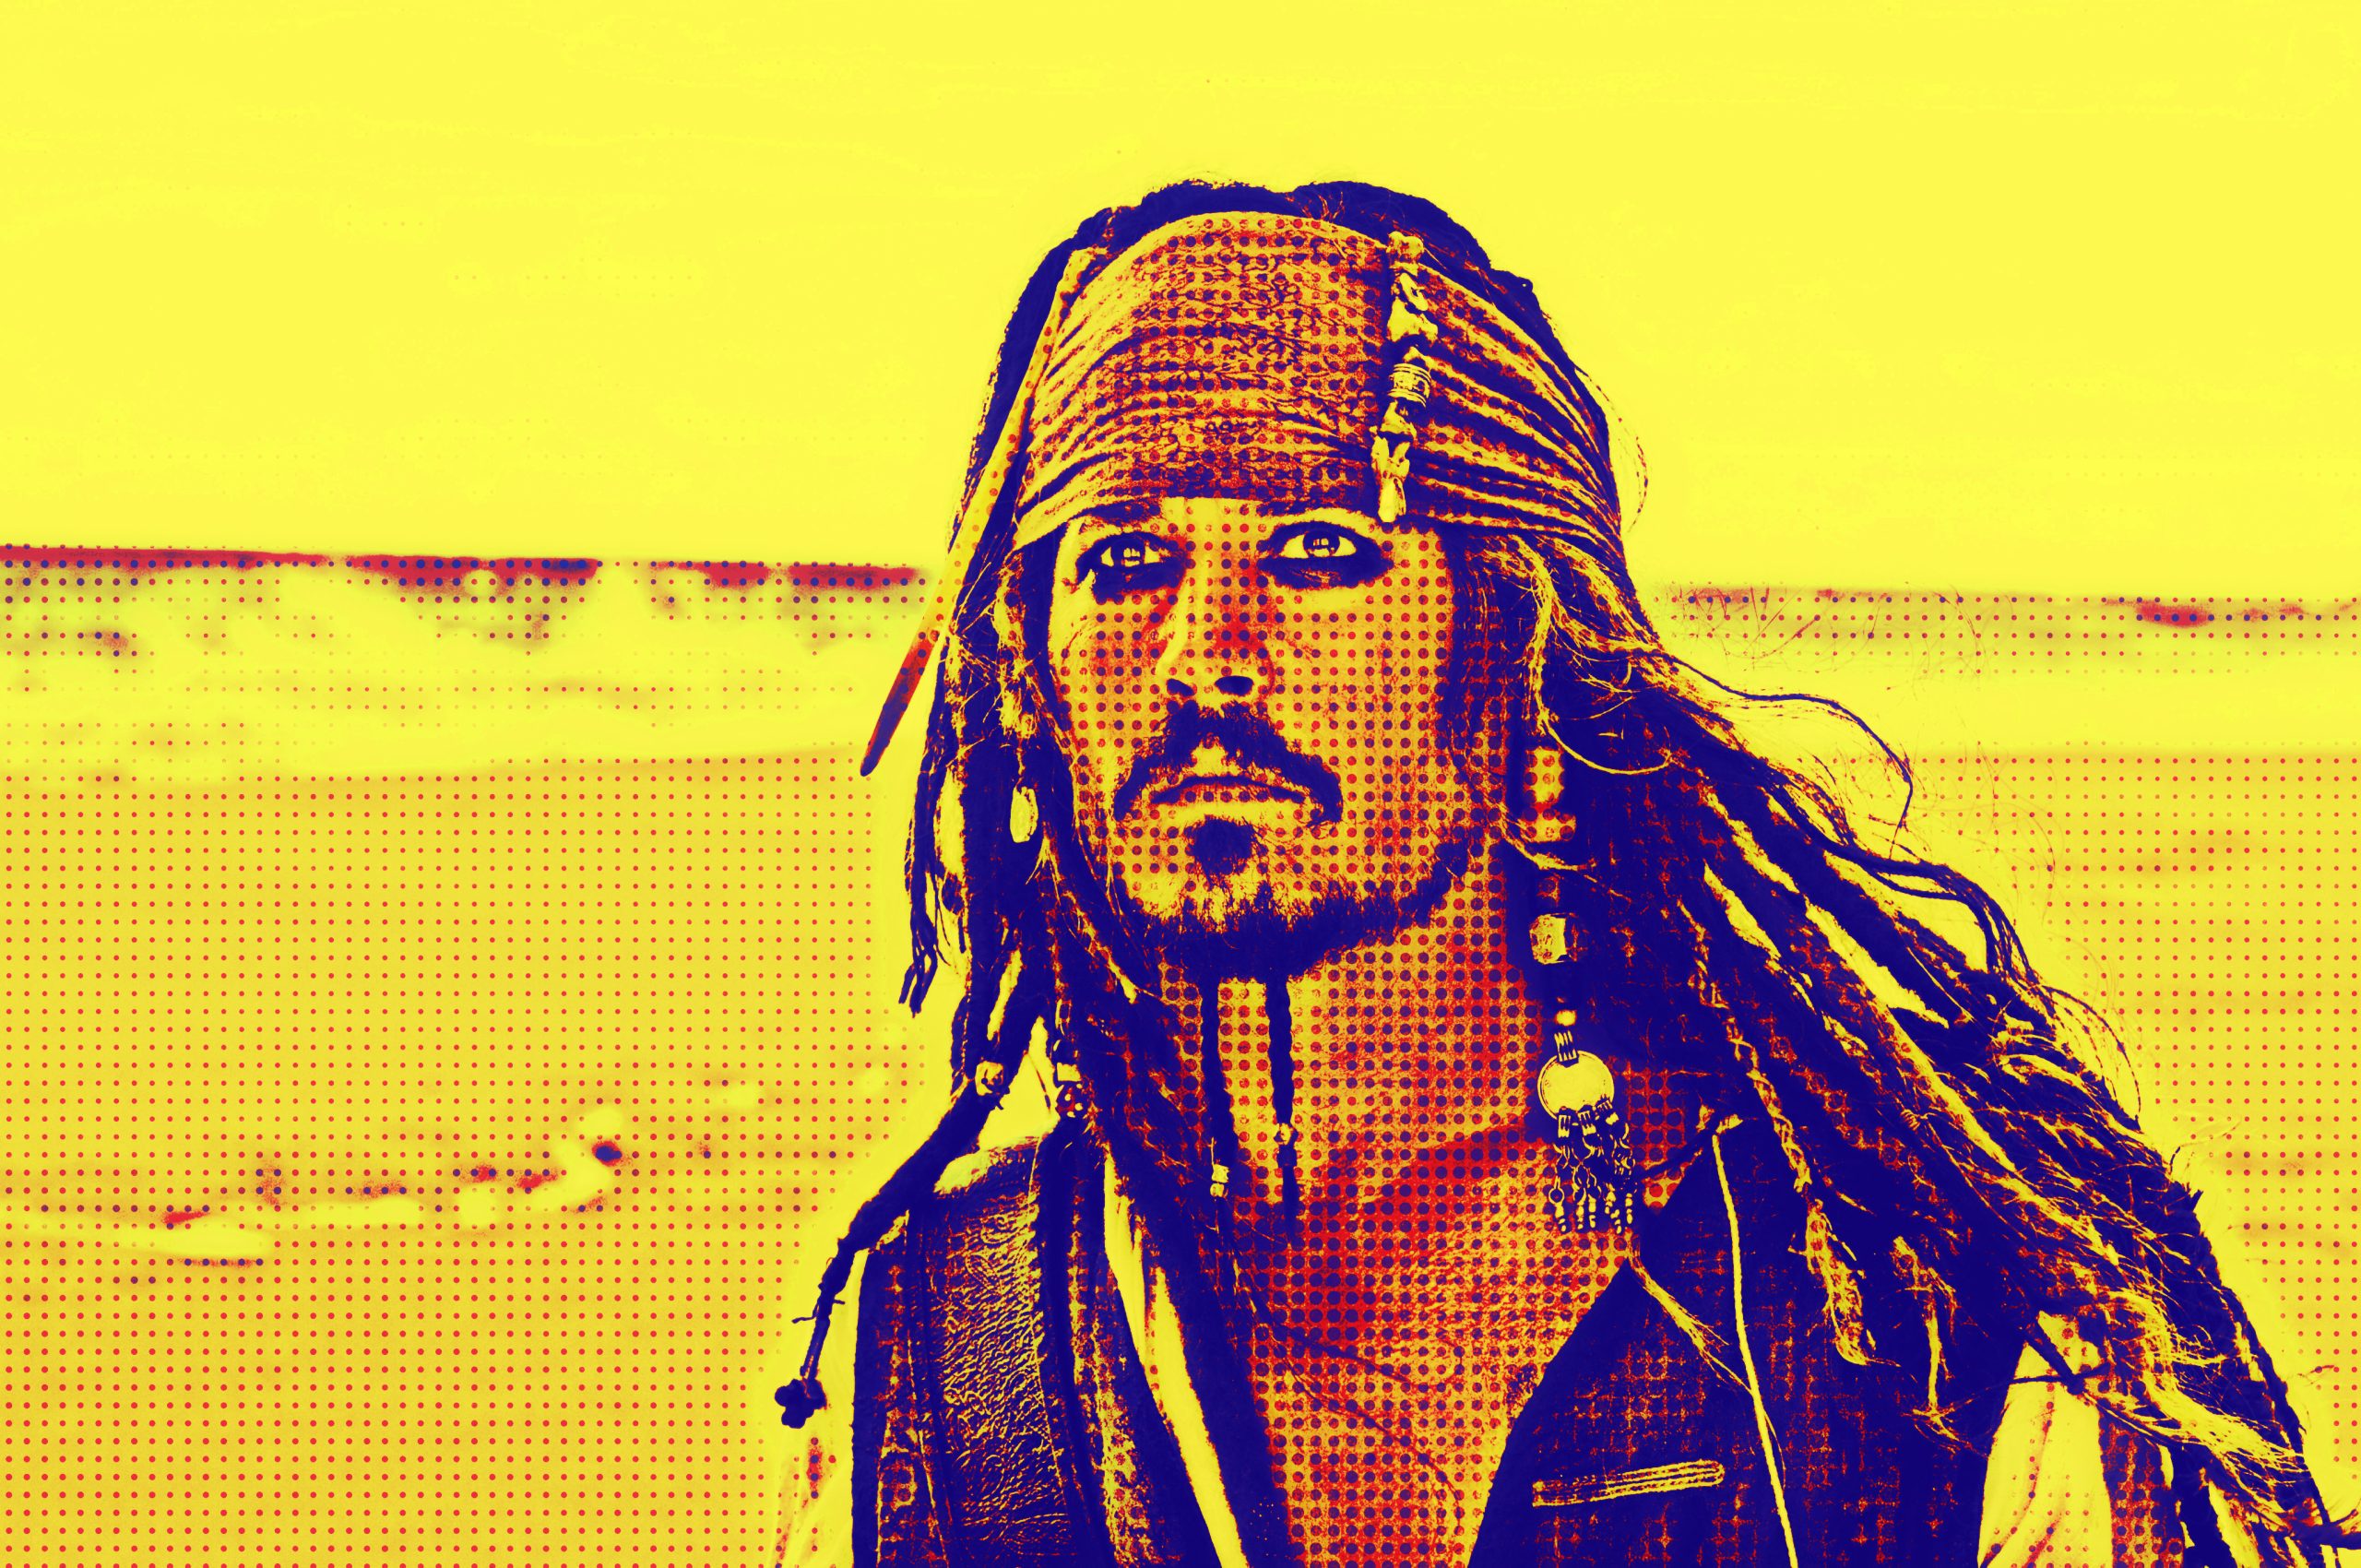 Johnny Depp in Pirates of the Caribbean: On Stranger Tides